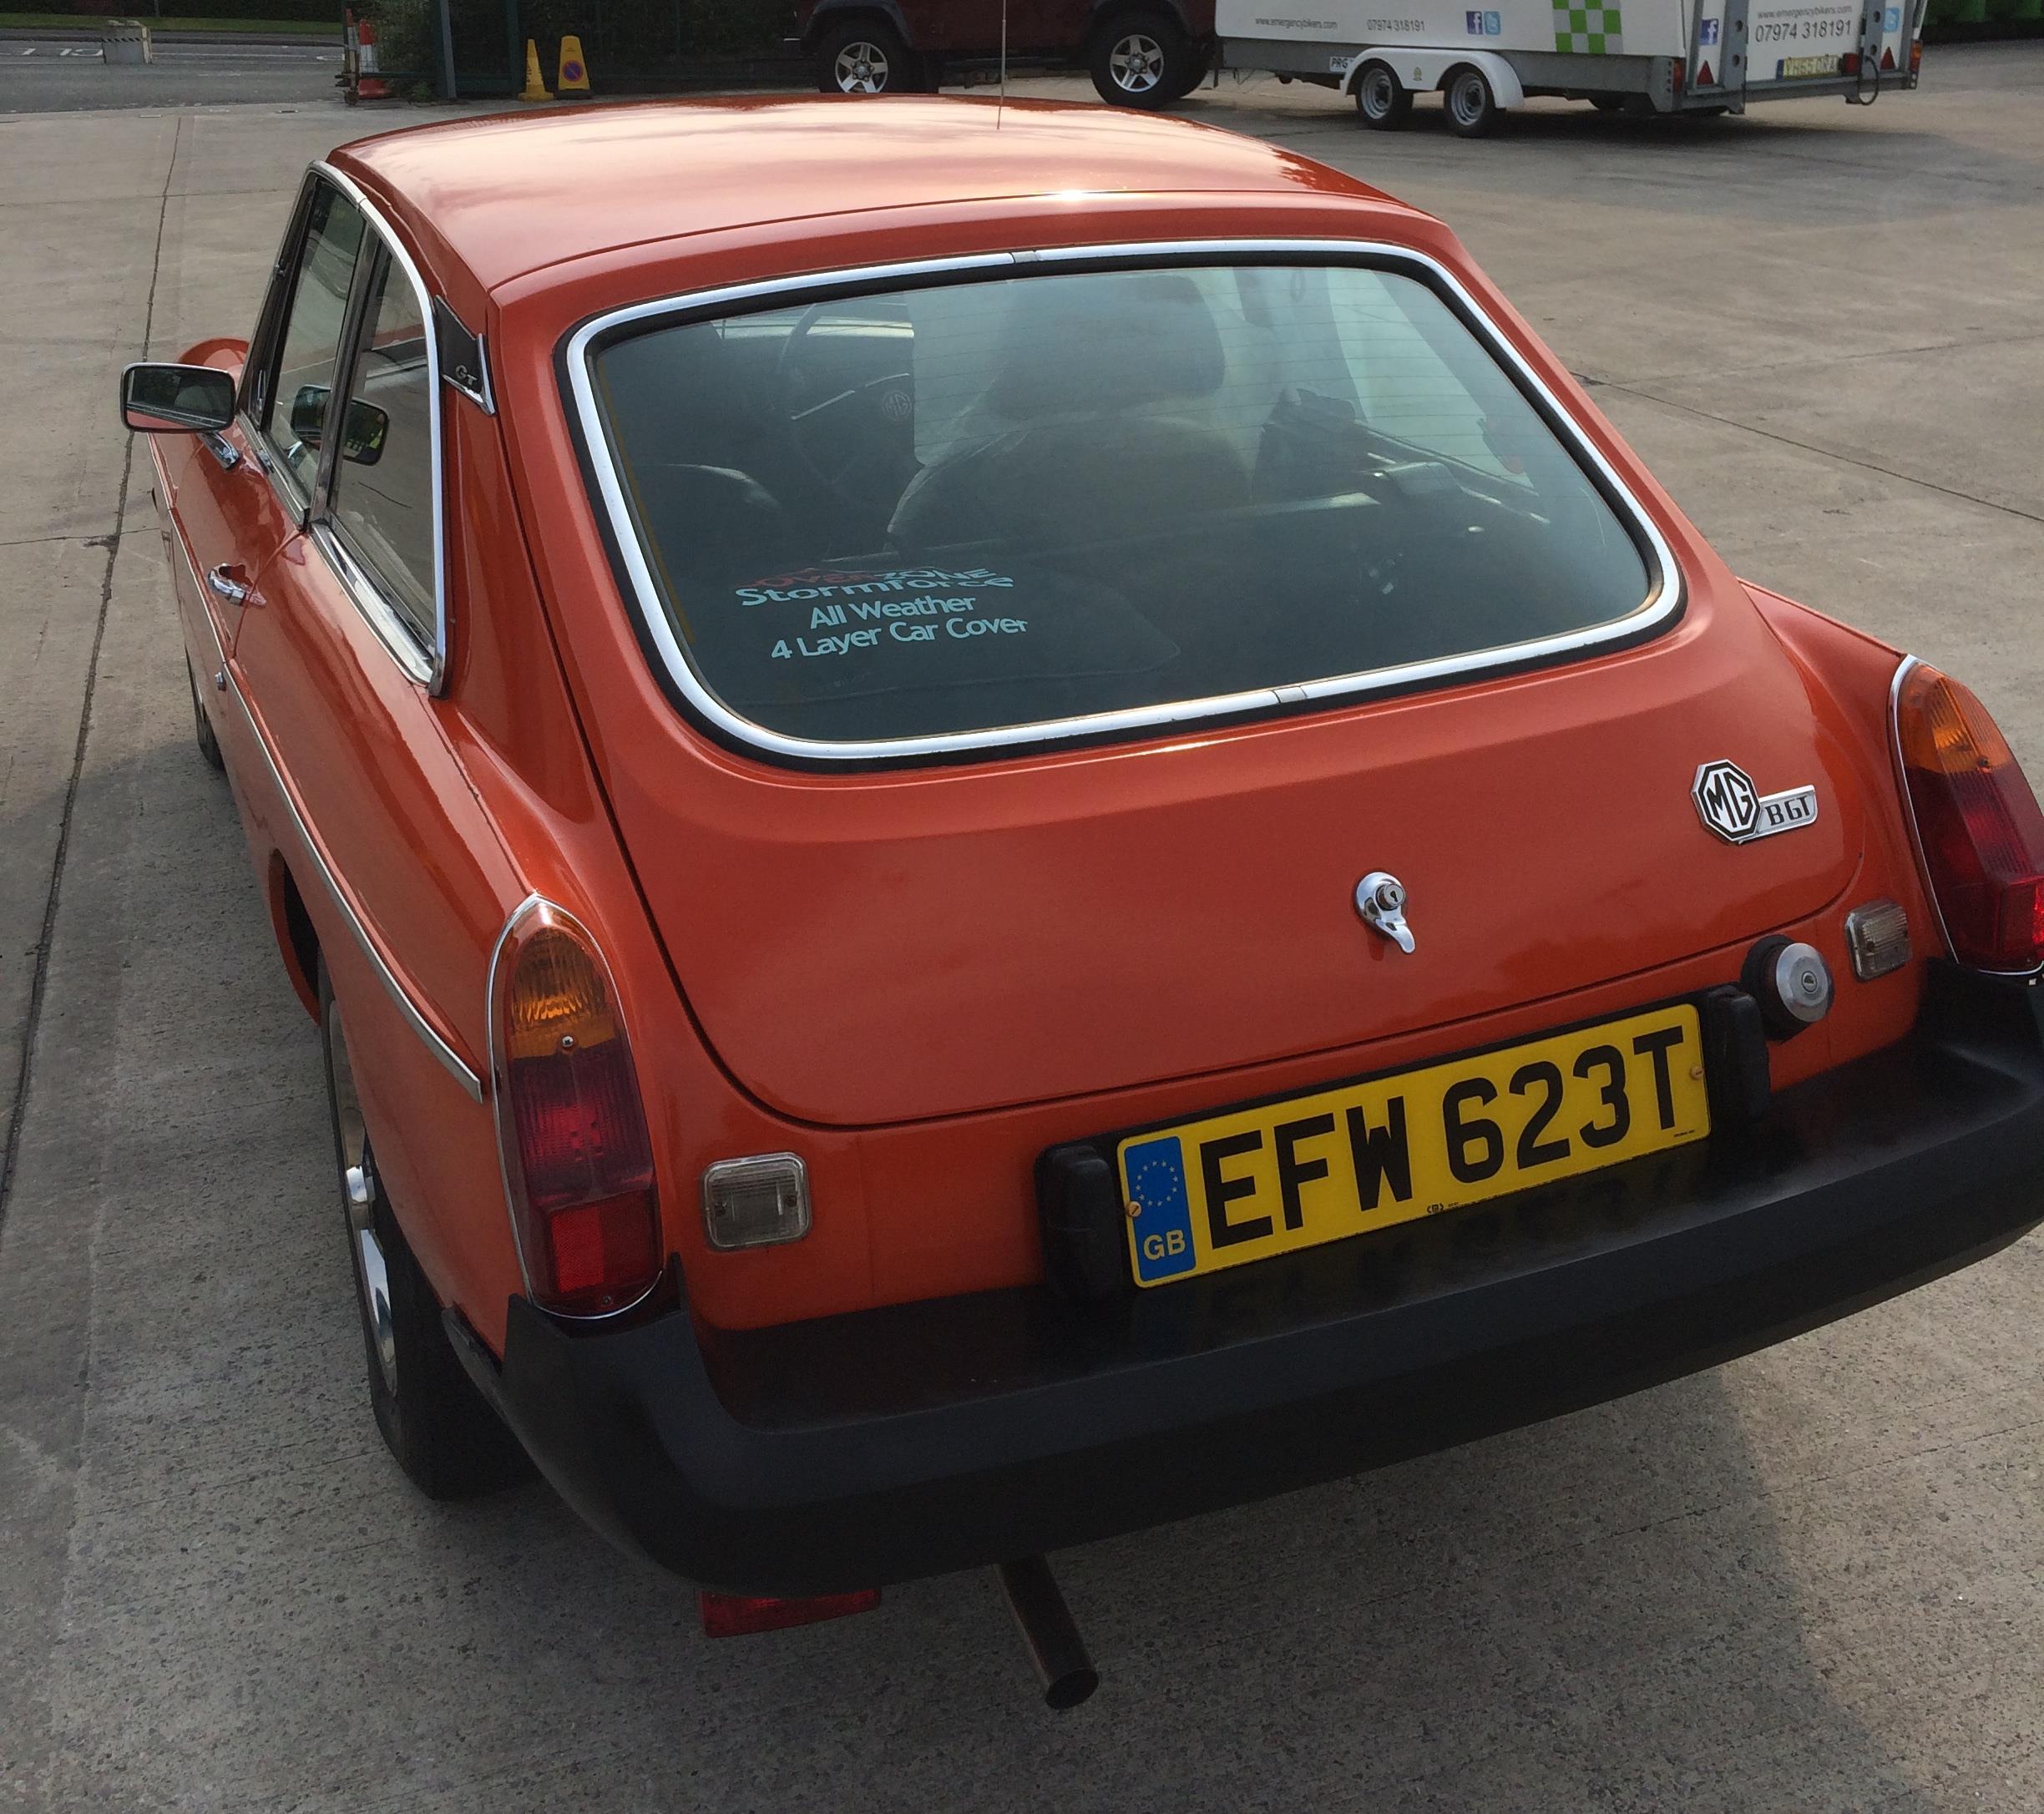 MGB GT 1.8 SPORTS HARD TOP - petrol - red Reg No EFW 623T Rec Mil 83,898 Date of last MOT: 21.2. - Image 18 of 25